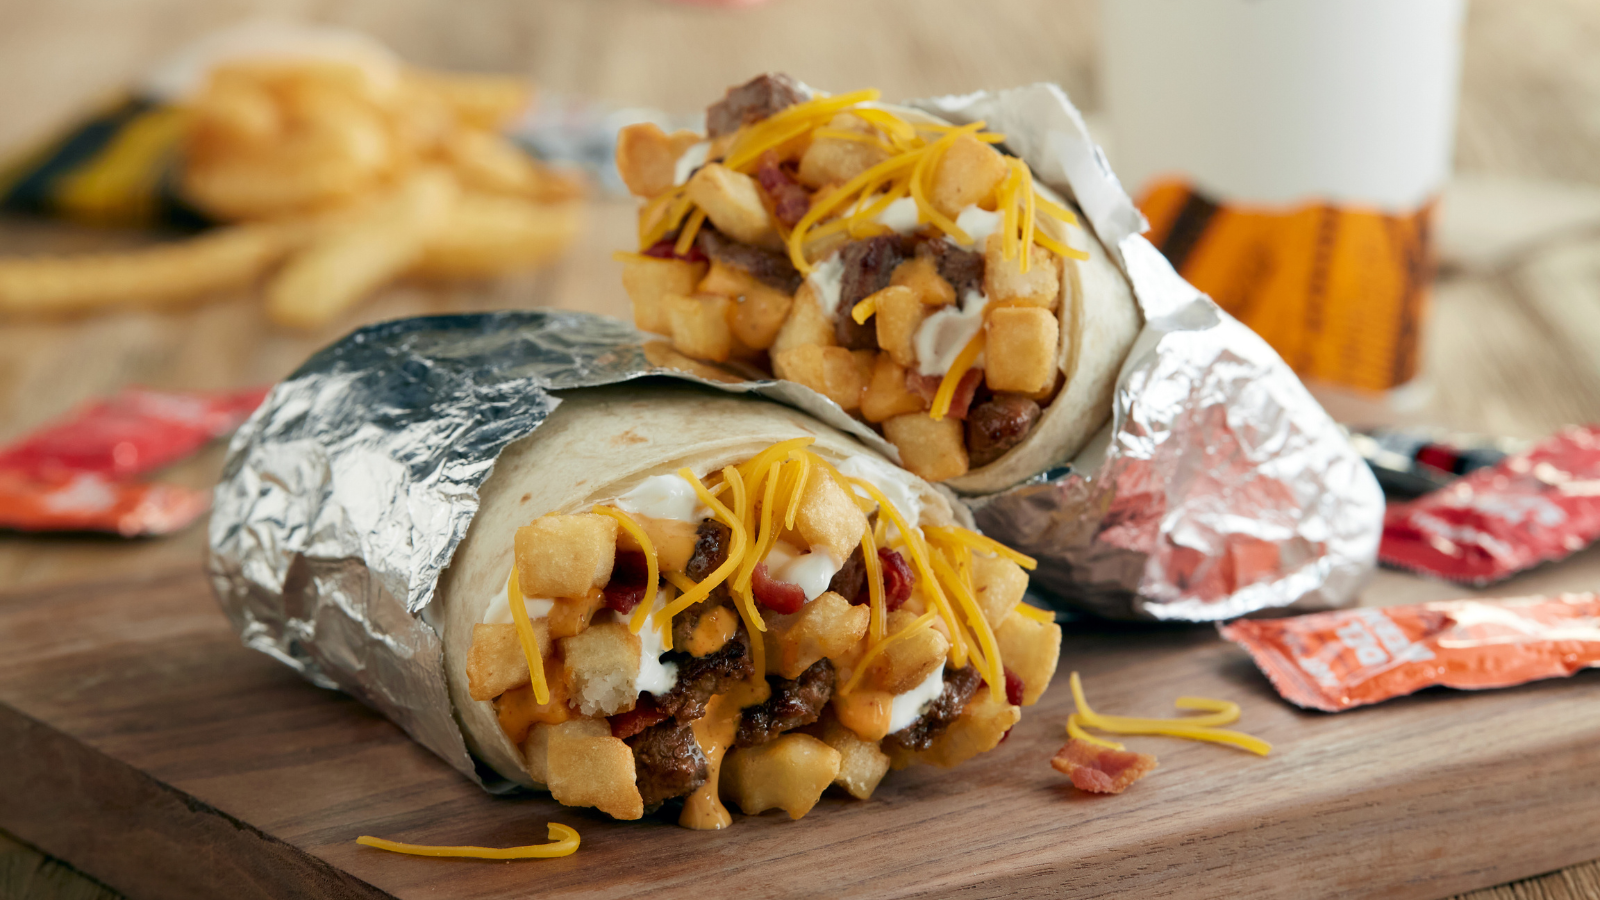 Best Burrito Franchises for Convenience Stores Travel Plazas